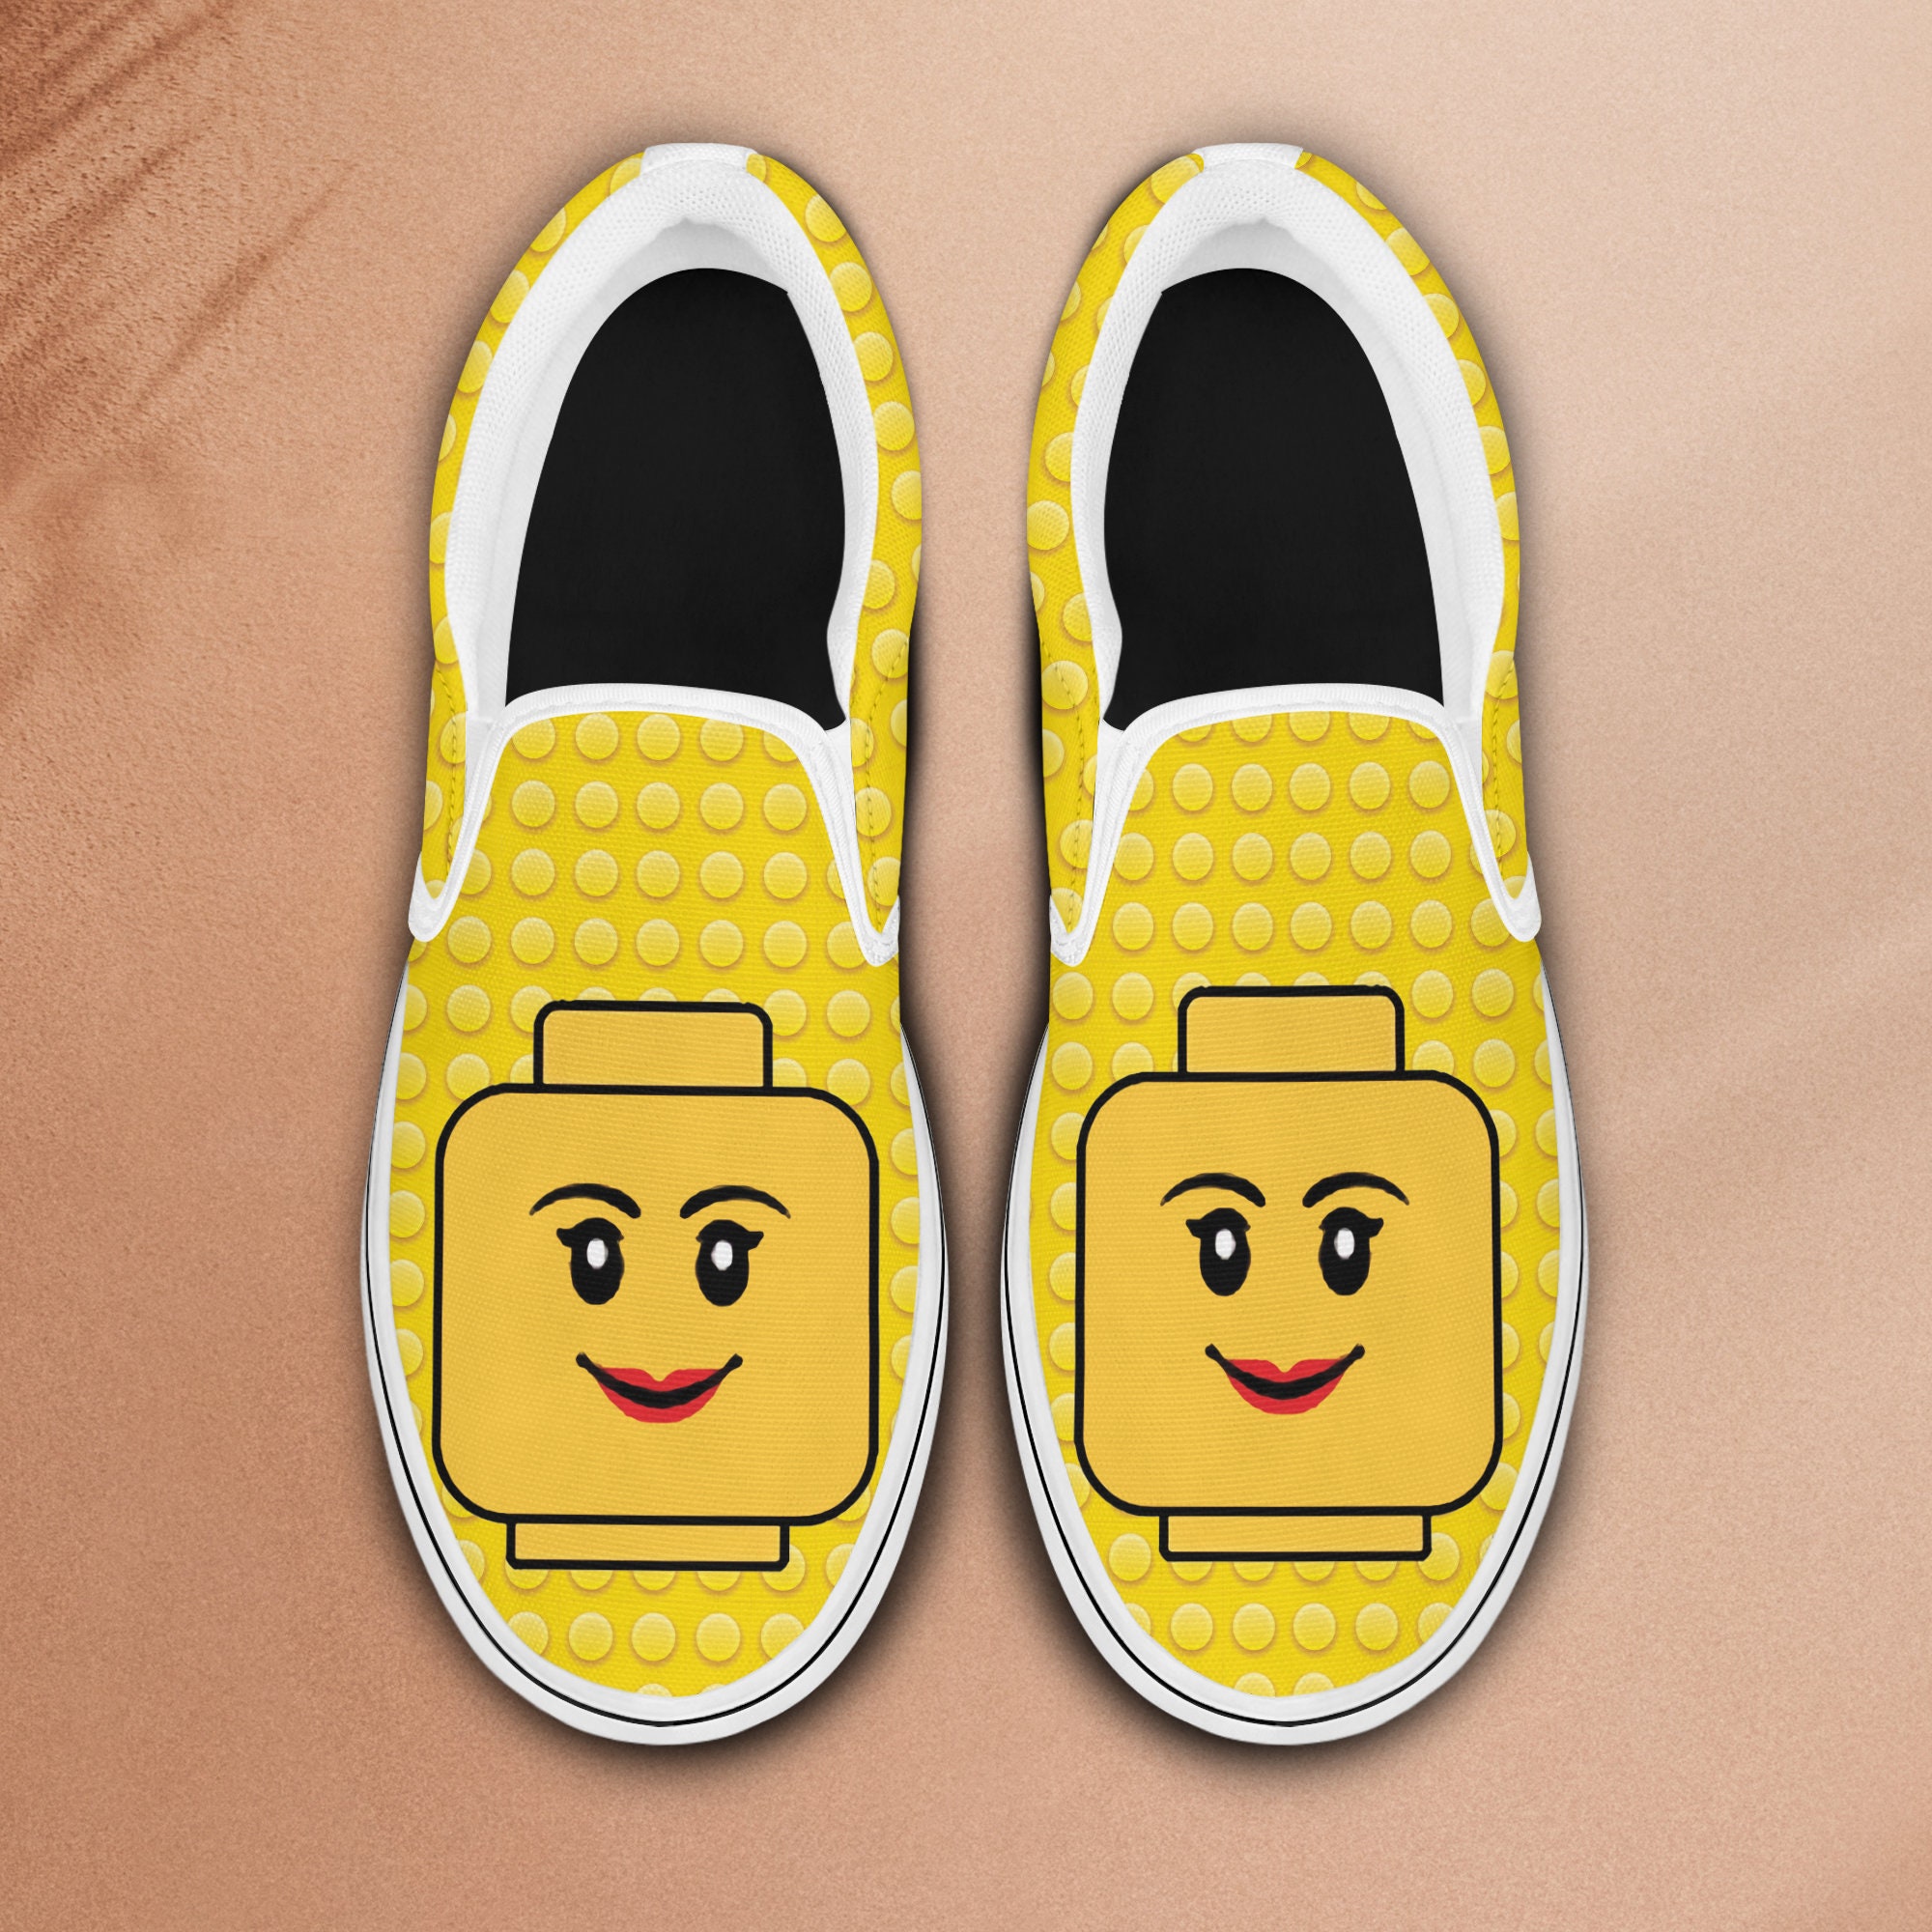 Legos Shoes -